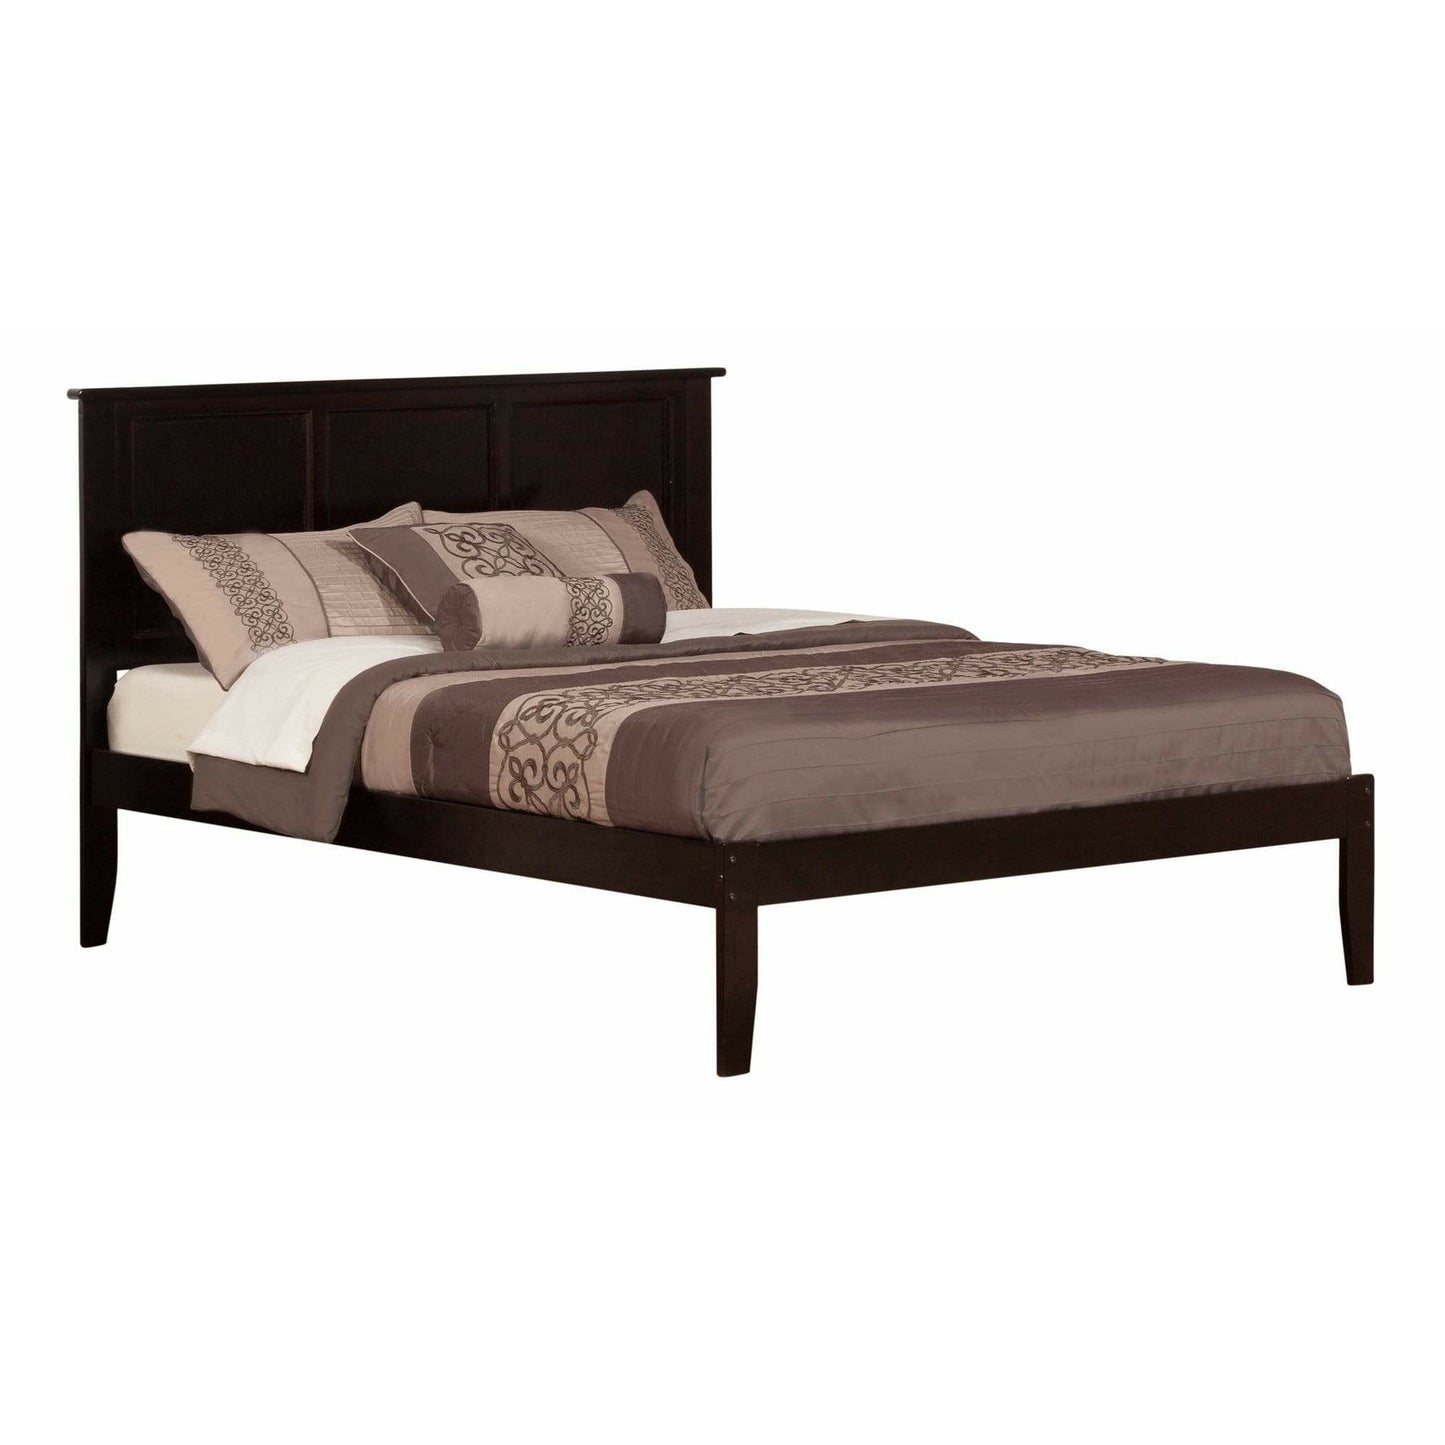 Atlantic Furniture Bed Espresso Madison Queen Platform Bed with Open Foot Board in Espresso